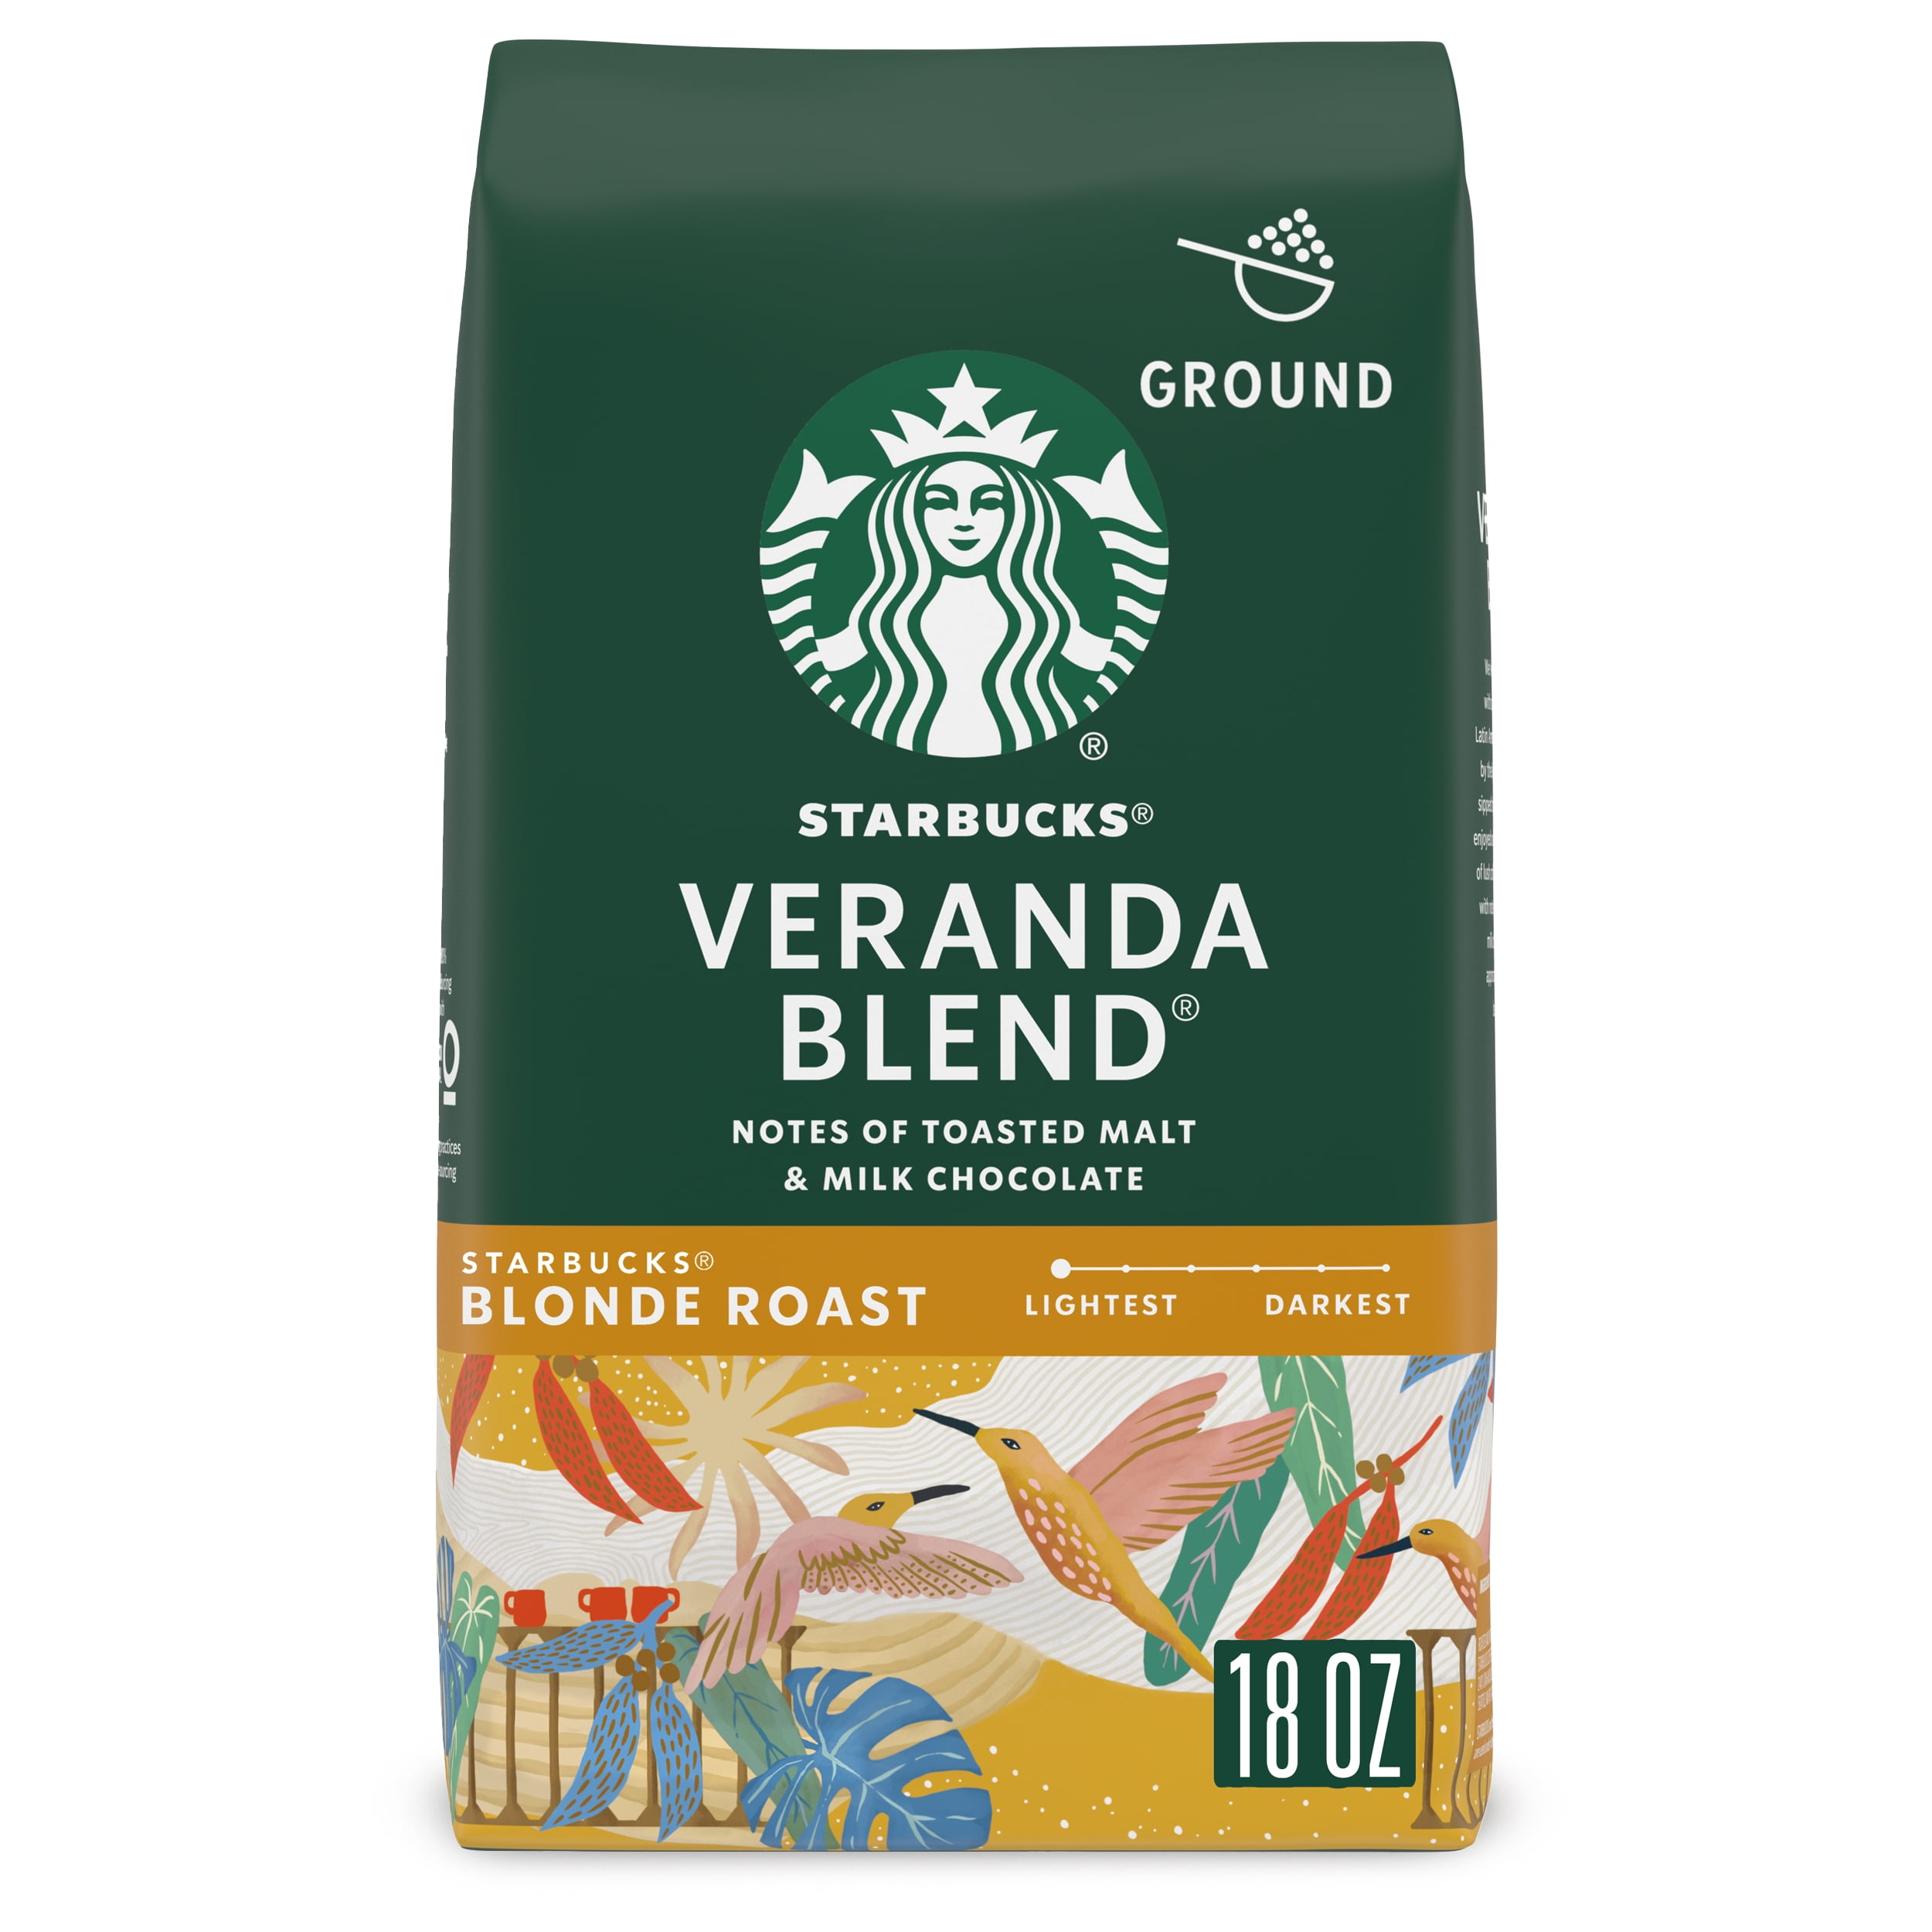 Starbucks Veranda Blend, Ground Coffee, Starbucks Blonde Roast, 18 oz